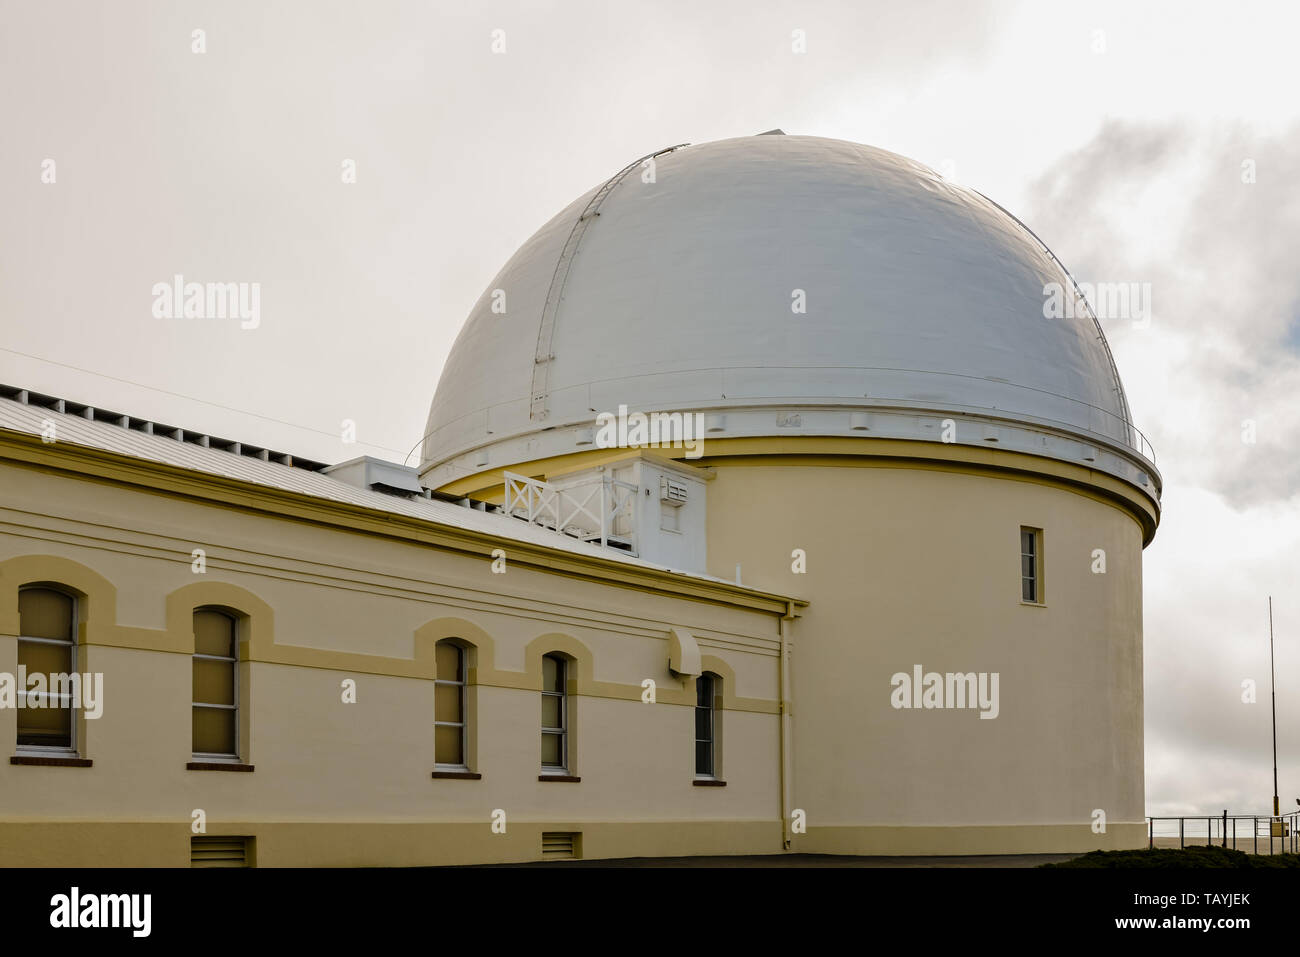 Dome of the original 36-inch refractor telescope at Lick Observatory - Mount Hamilton, San Jose, CA Stock Photo